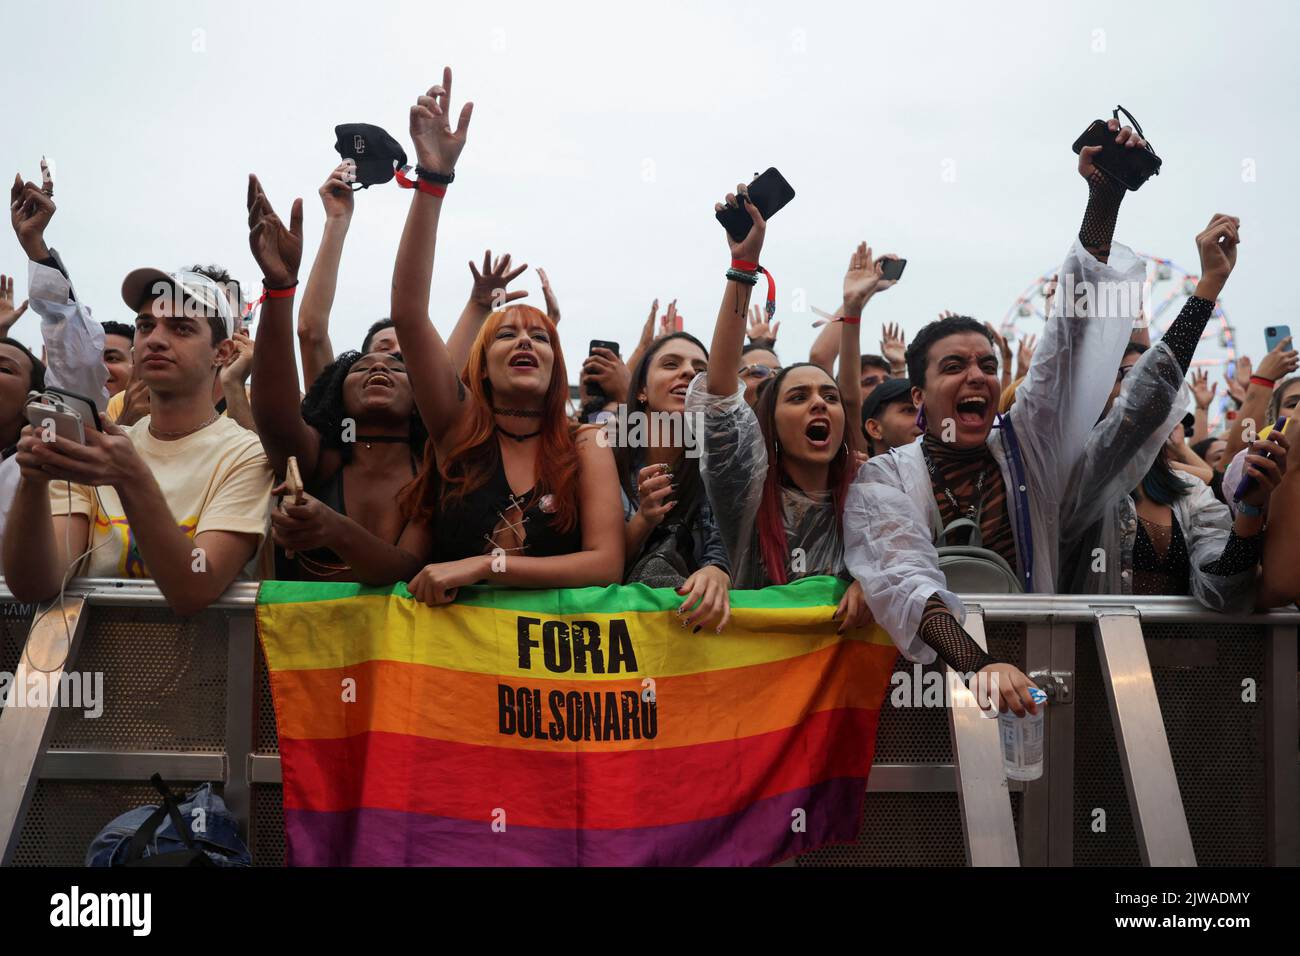 A flag reading 'Out Bolsonaro' is seen as fans attend the Rock in Rio music festival in Rio de Janeiro, Brazil September 4, 2022. REUTERS/Pilar Olivares Stock Photo